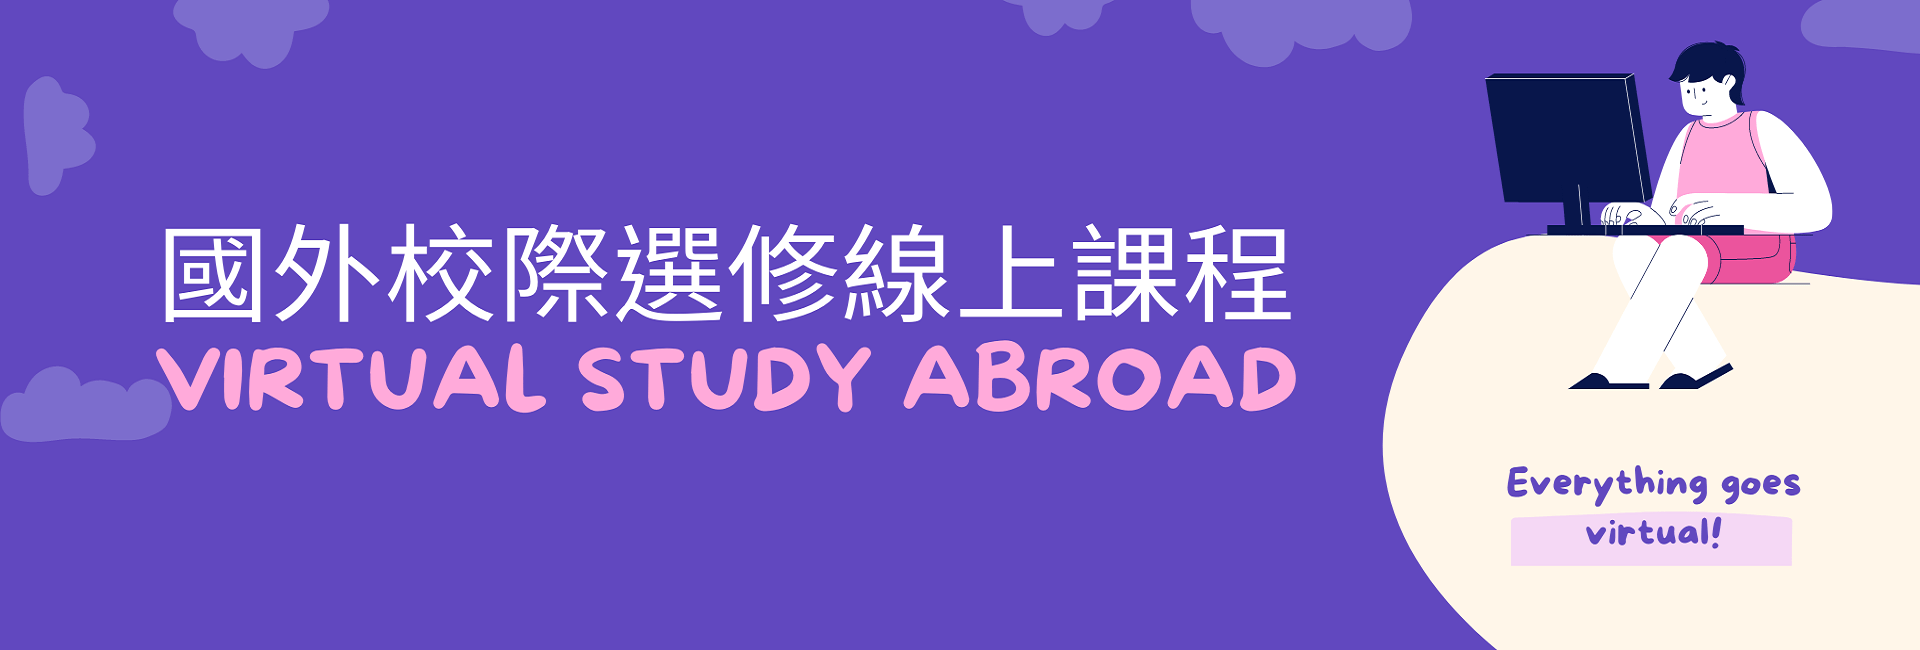 Virtual Study Abroad